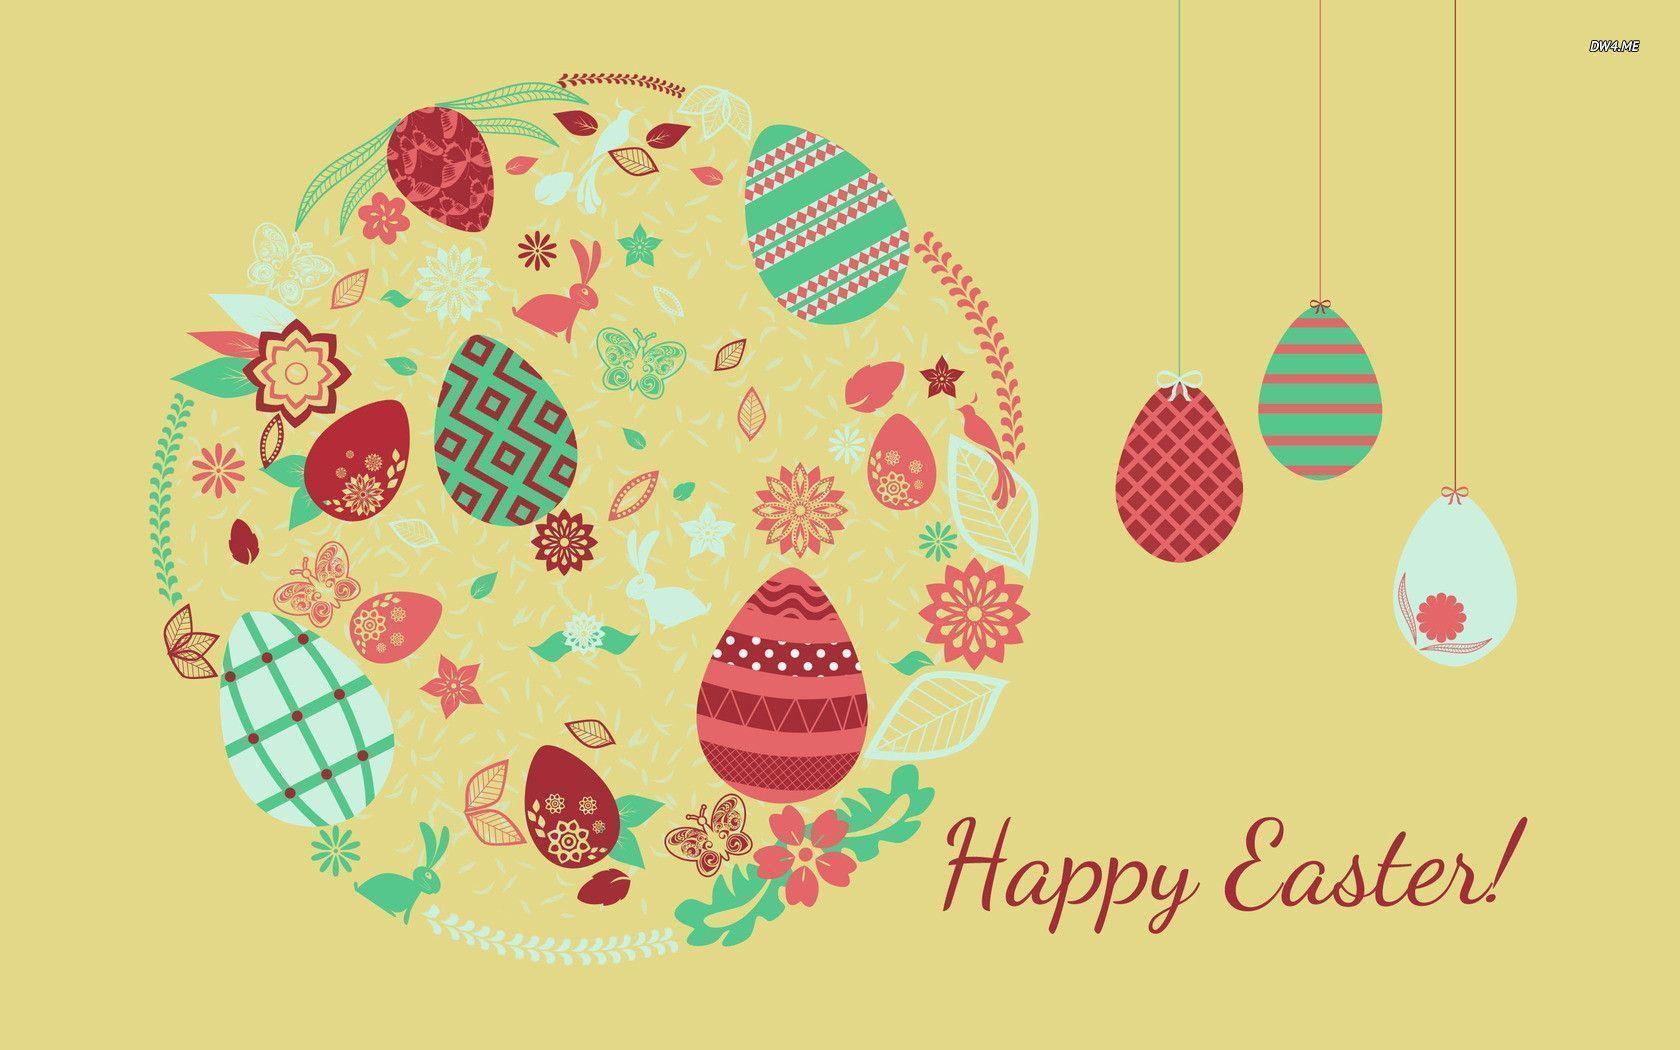 Wallpaper For > Happy Easter Desktop Wallpaper